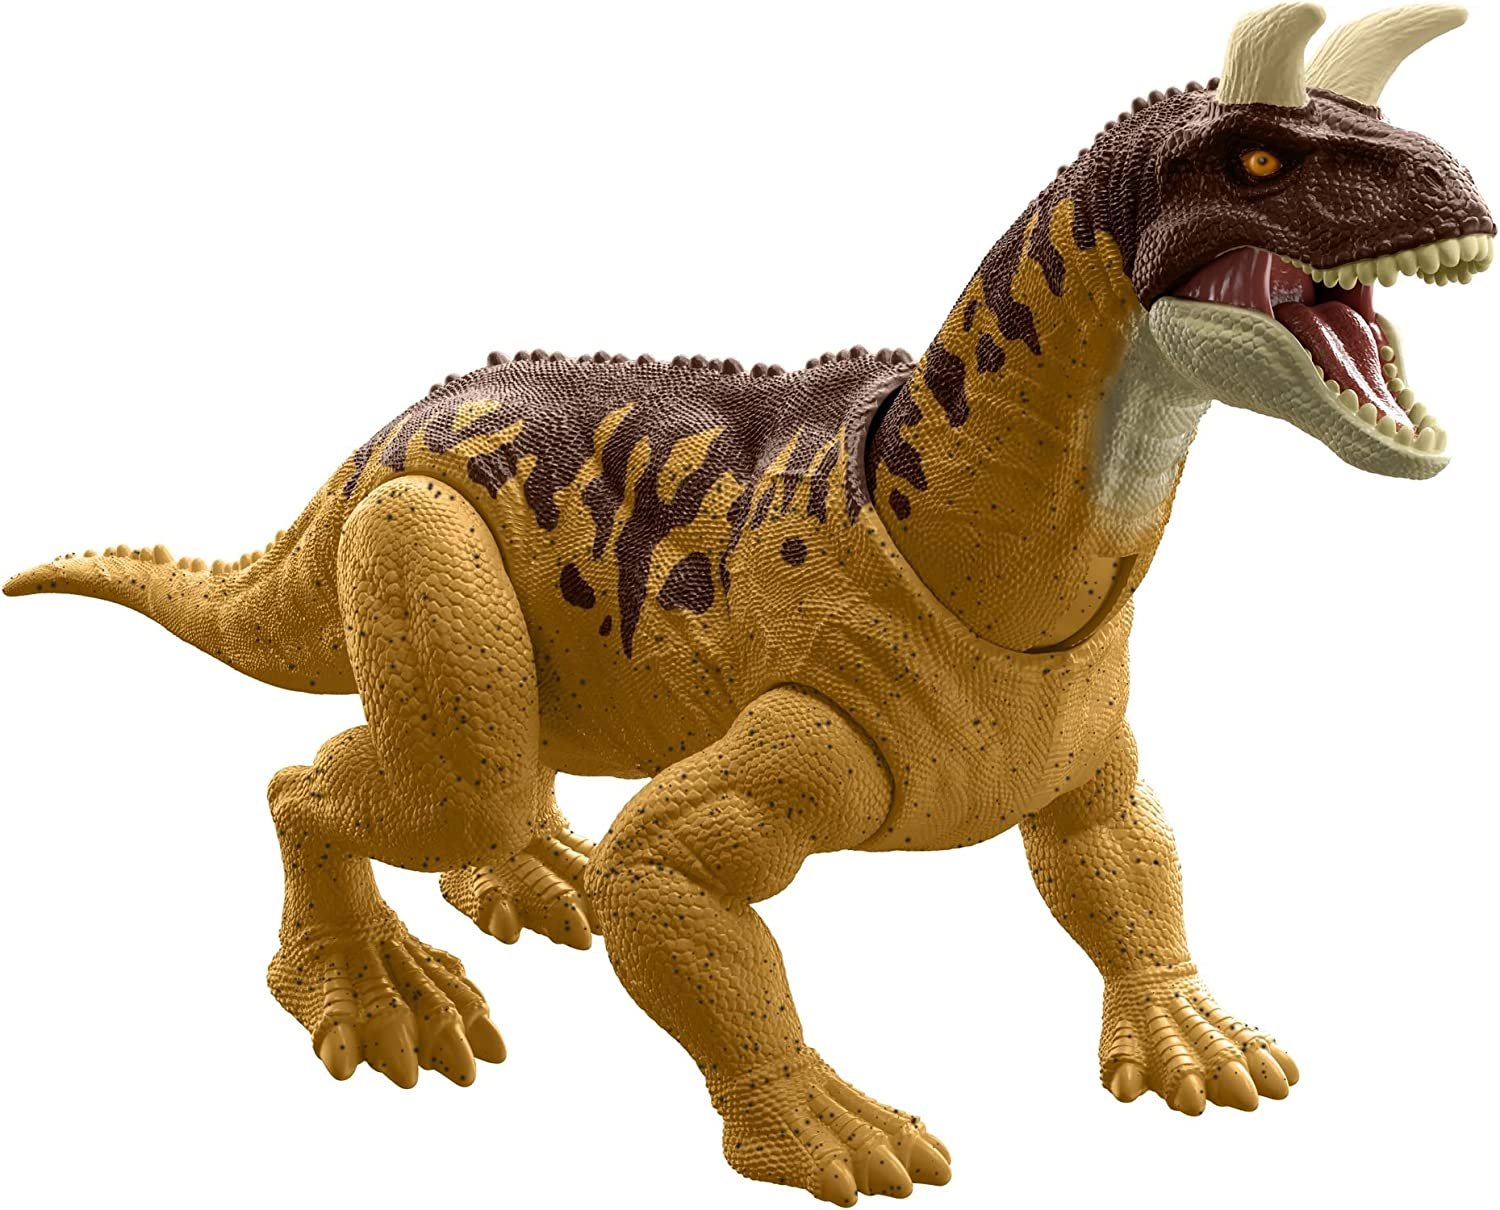 Comprar Jurassic World Dinosaurios Rugido Salvaj